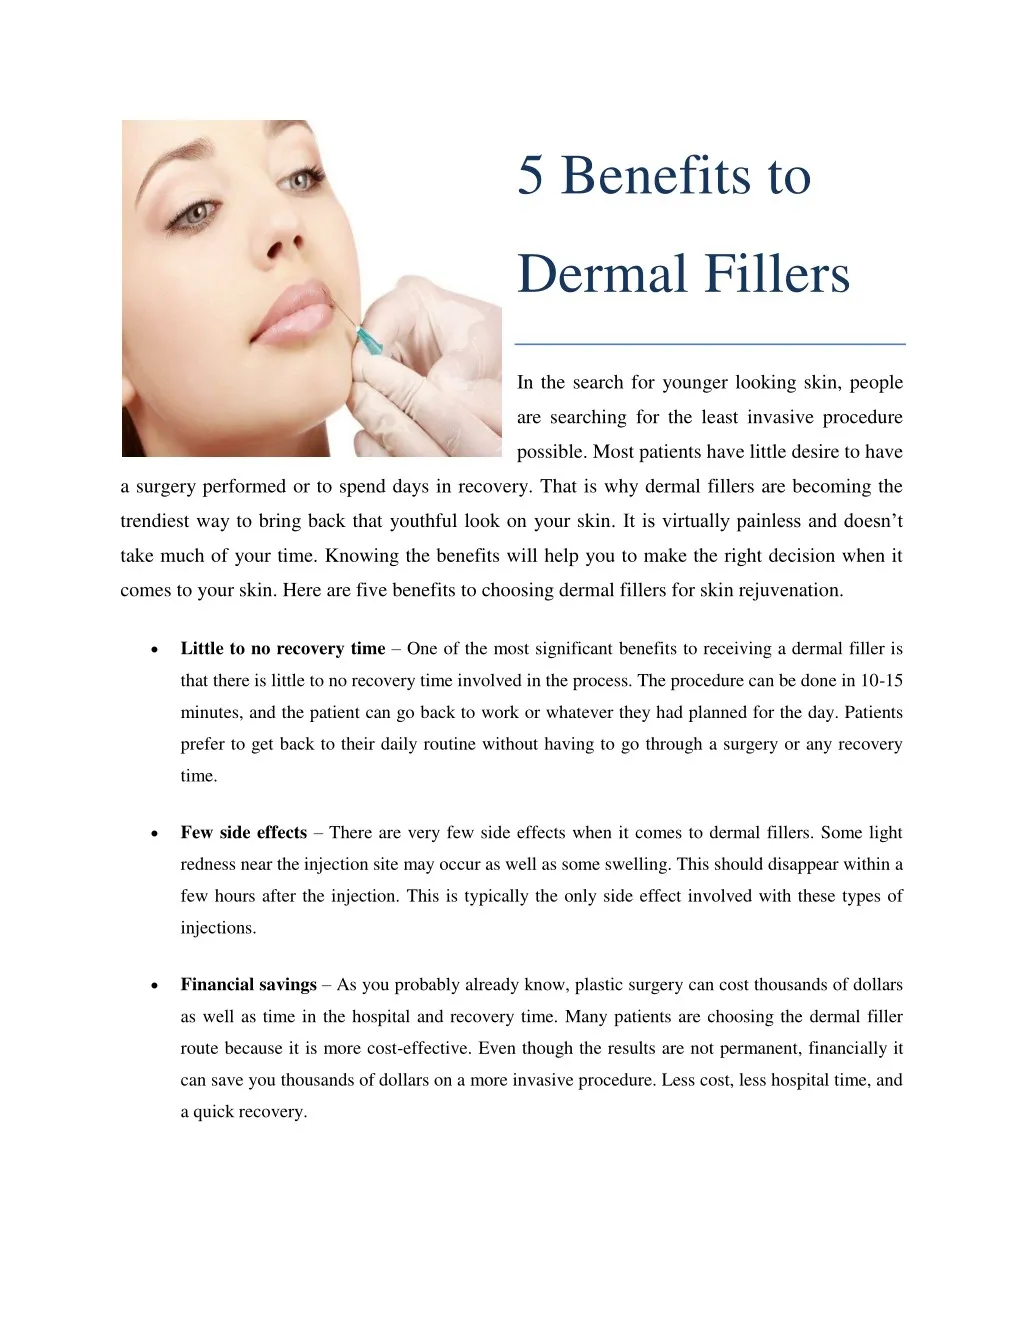 5 benefits to